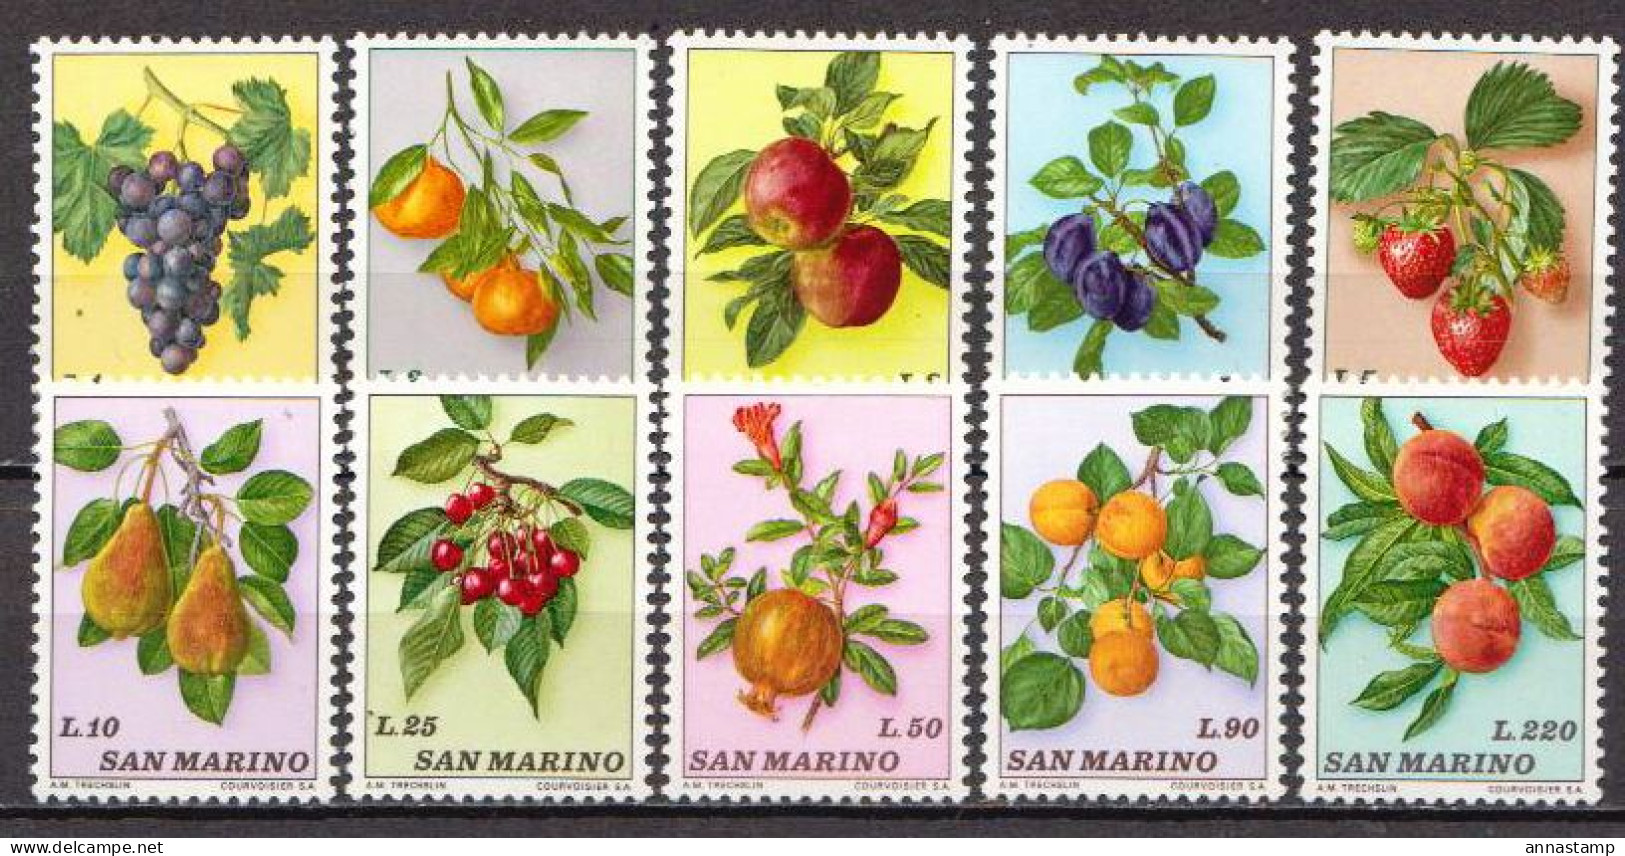 San Marino MNH Set - Fruits